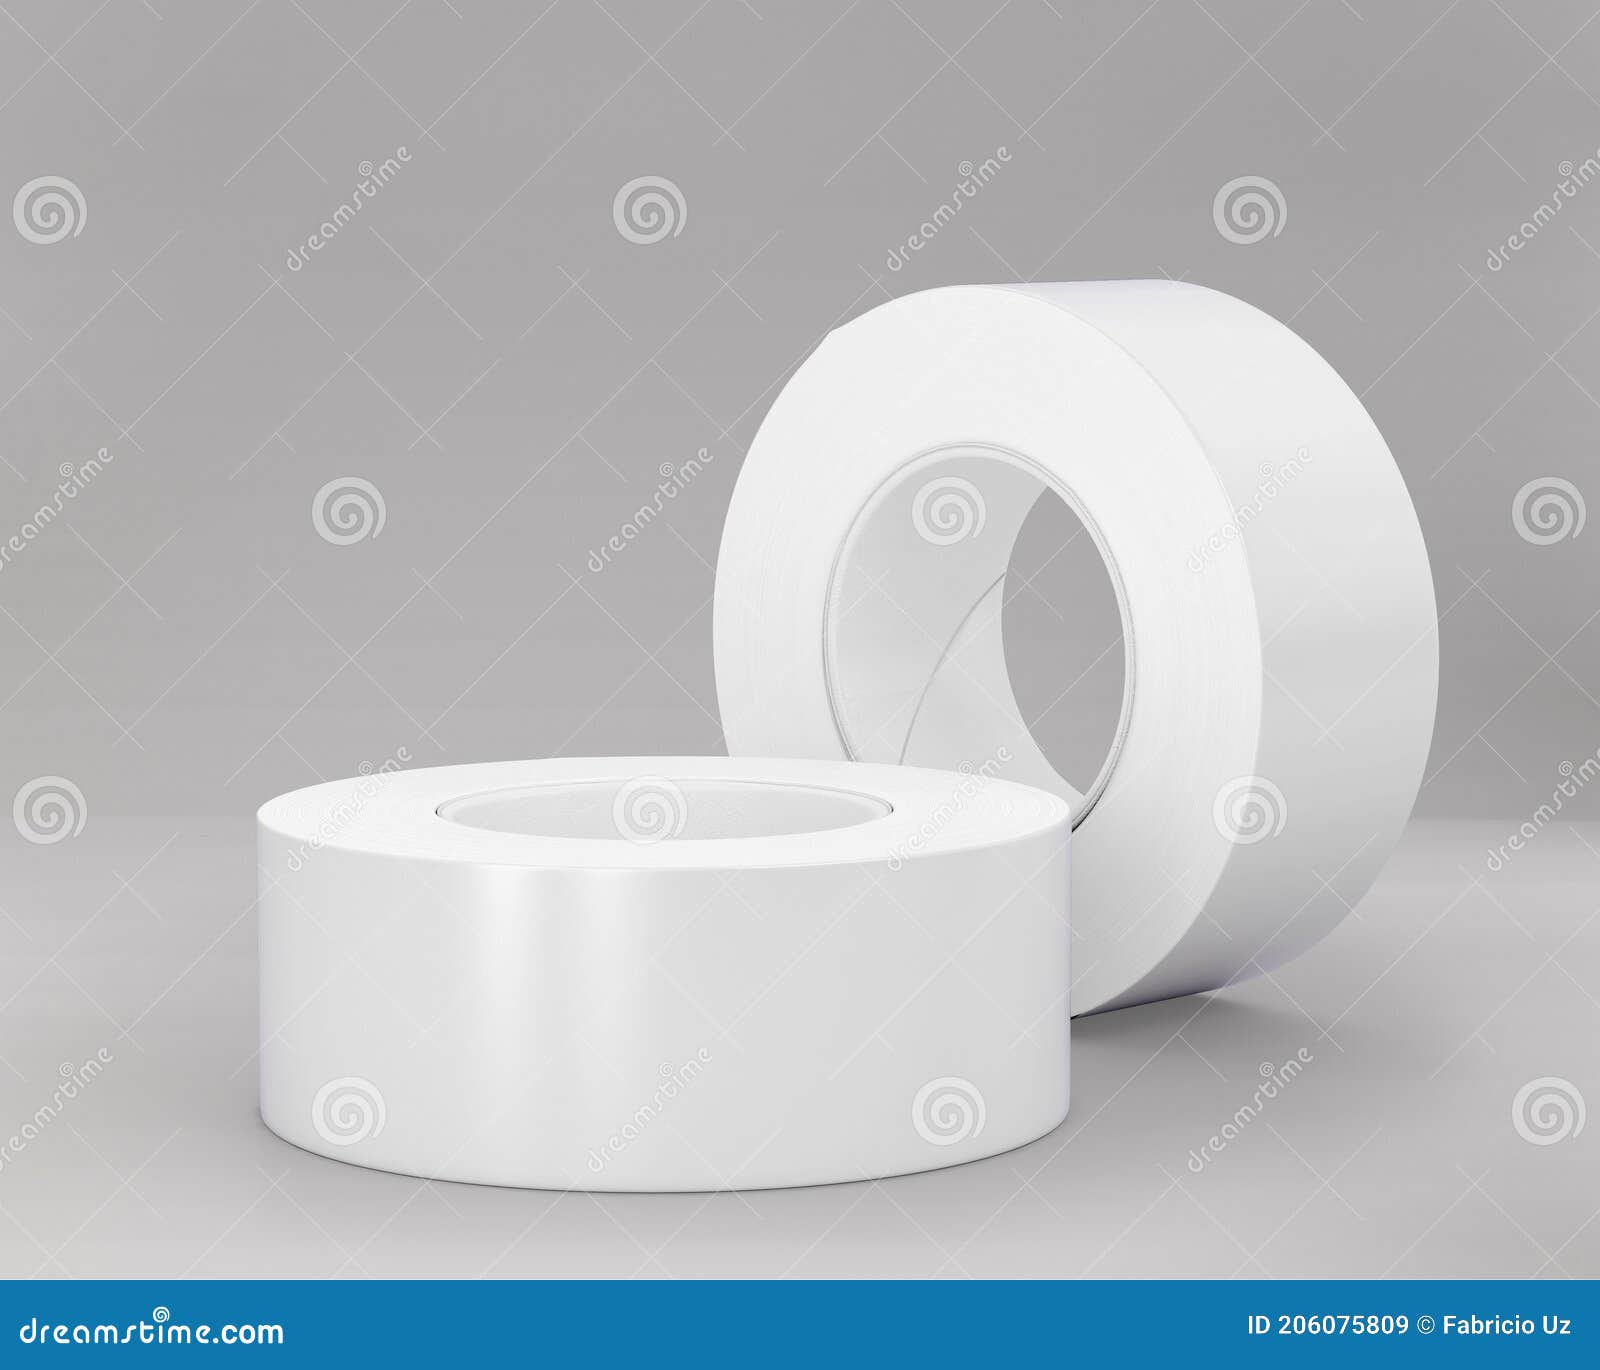 Download 3d Illustration Duct Tape Mockup Isolated On White Background Stock Illustration Illustration Of Adhesive Label 206075809